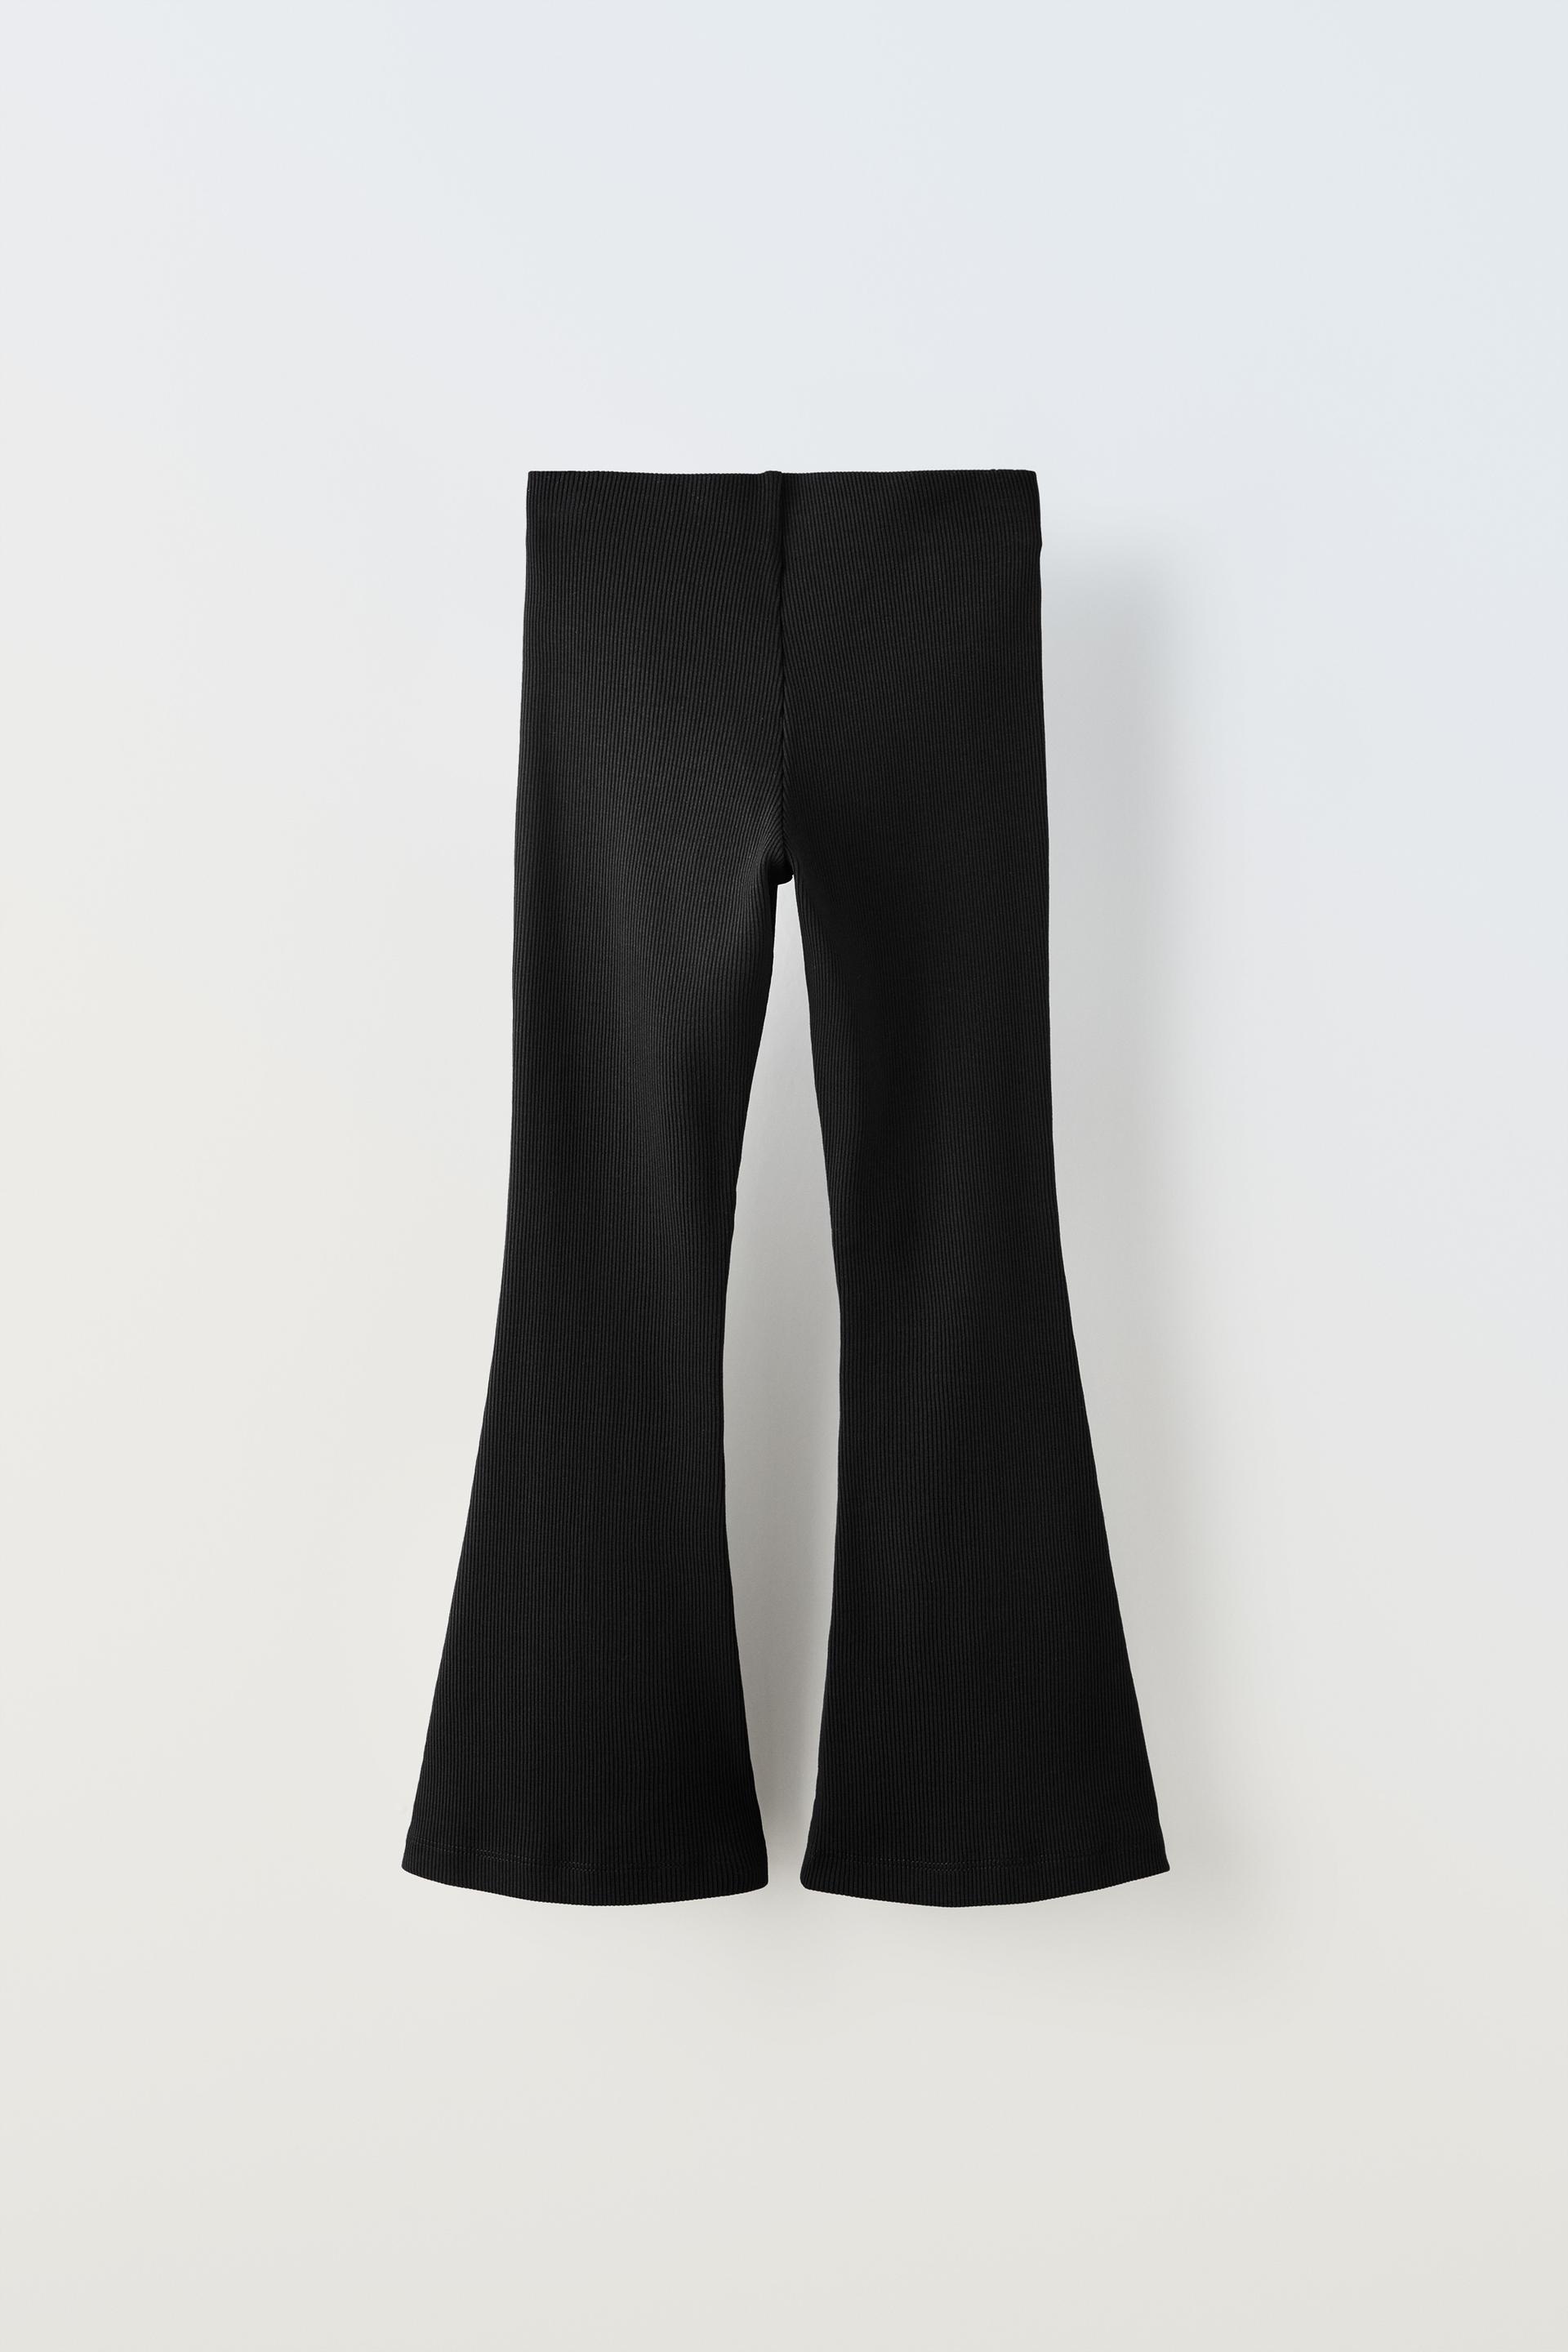 Zara, Pants & Jumpsuits, Zara Slit Ribbed Legging Pant Small S Cream Ecru